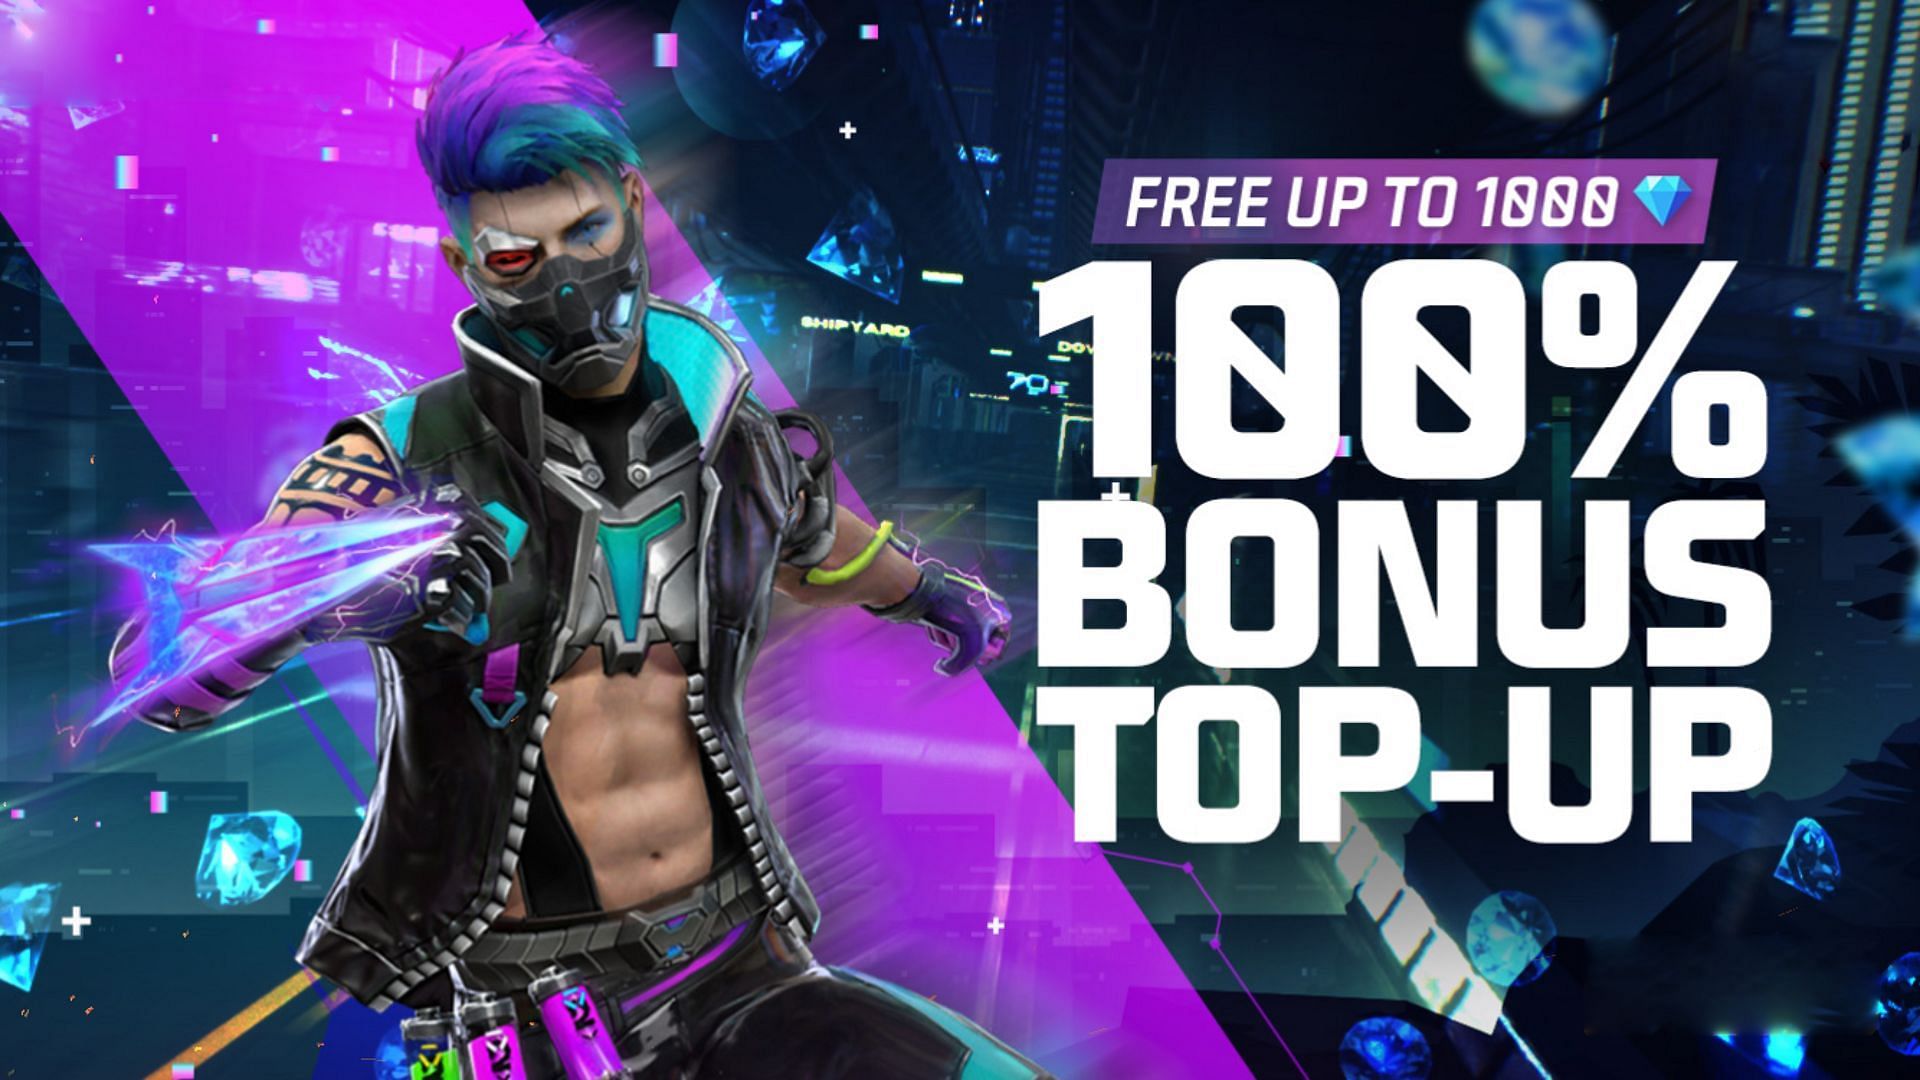 Free Fire MAX 100% Bonus Top-Up event: How to get double diamonds